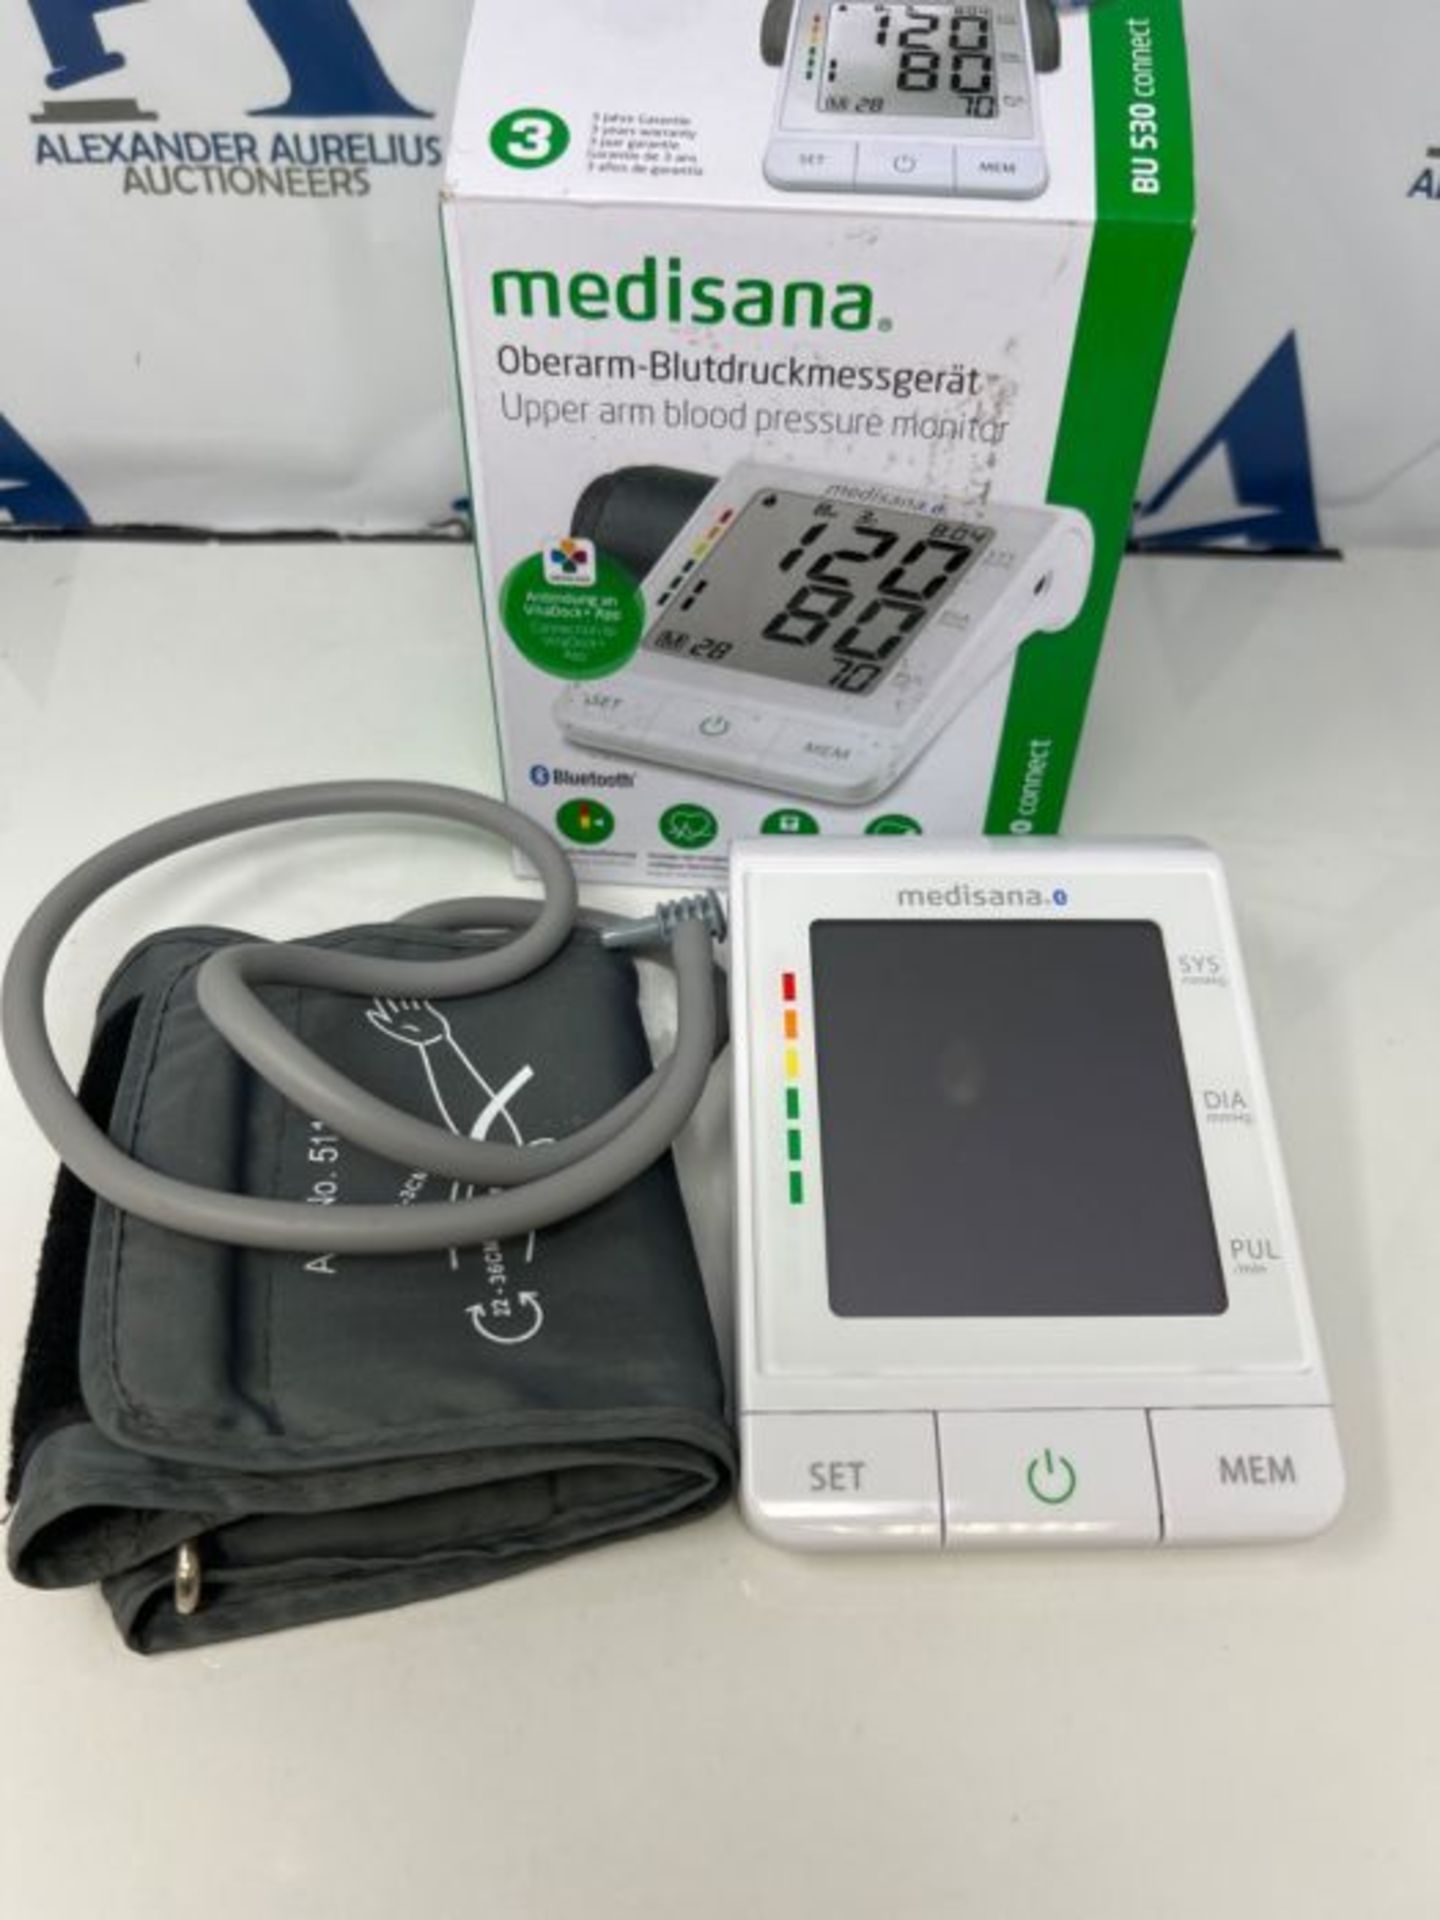 Medisana BU 530 Bluetooth Digital Upper Arm Blood Pressure Monitor - Home Use Heartbea - Image 3 of 3